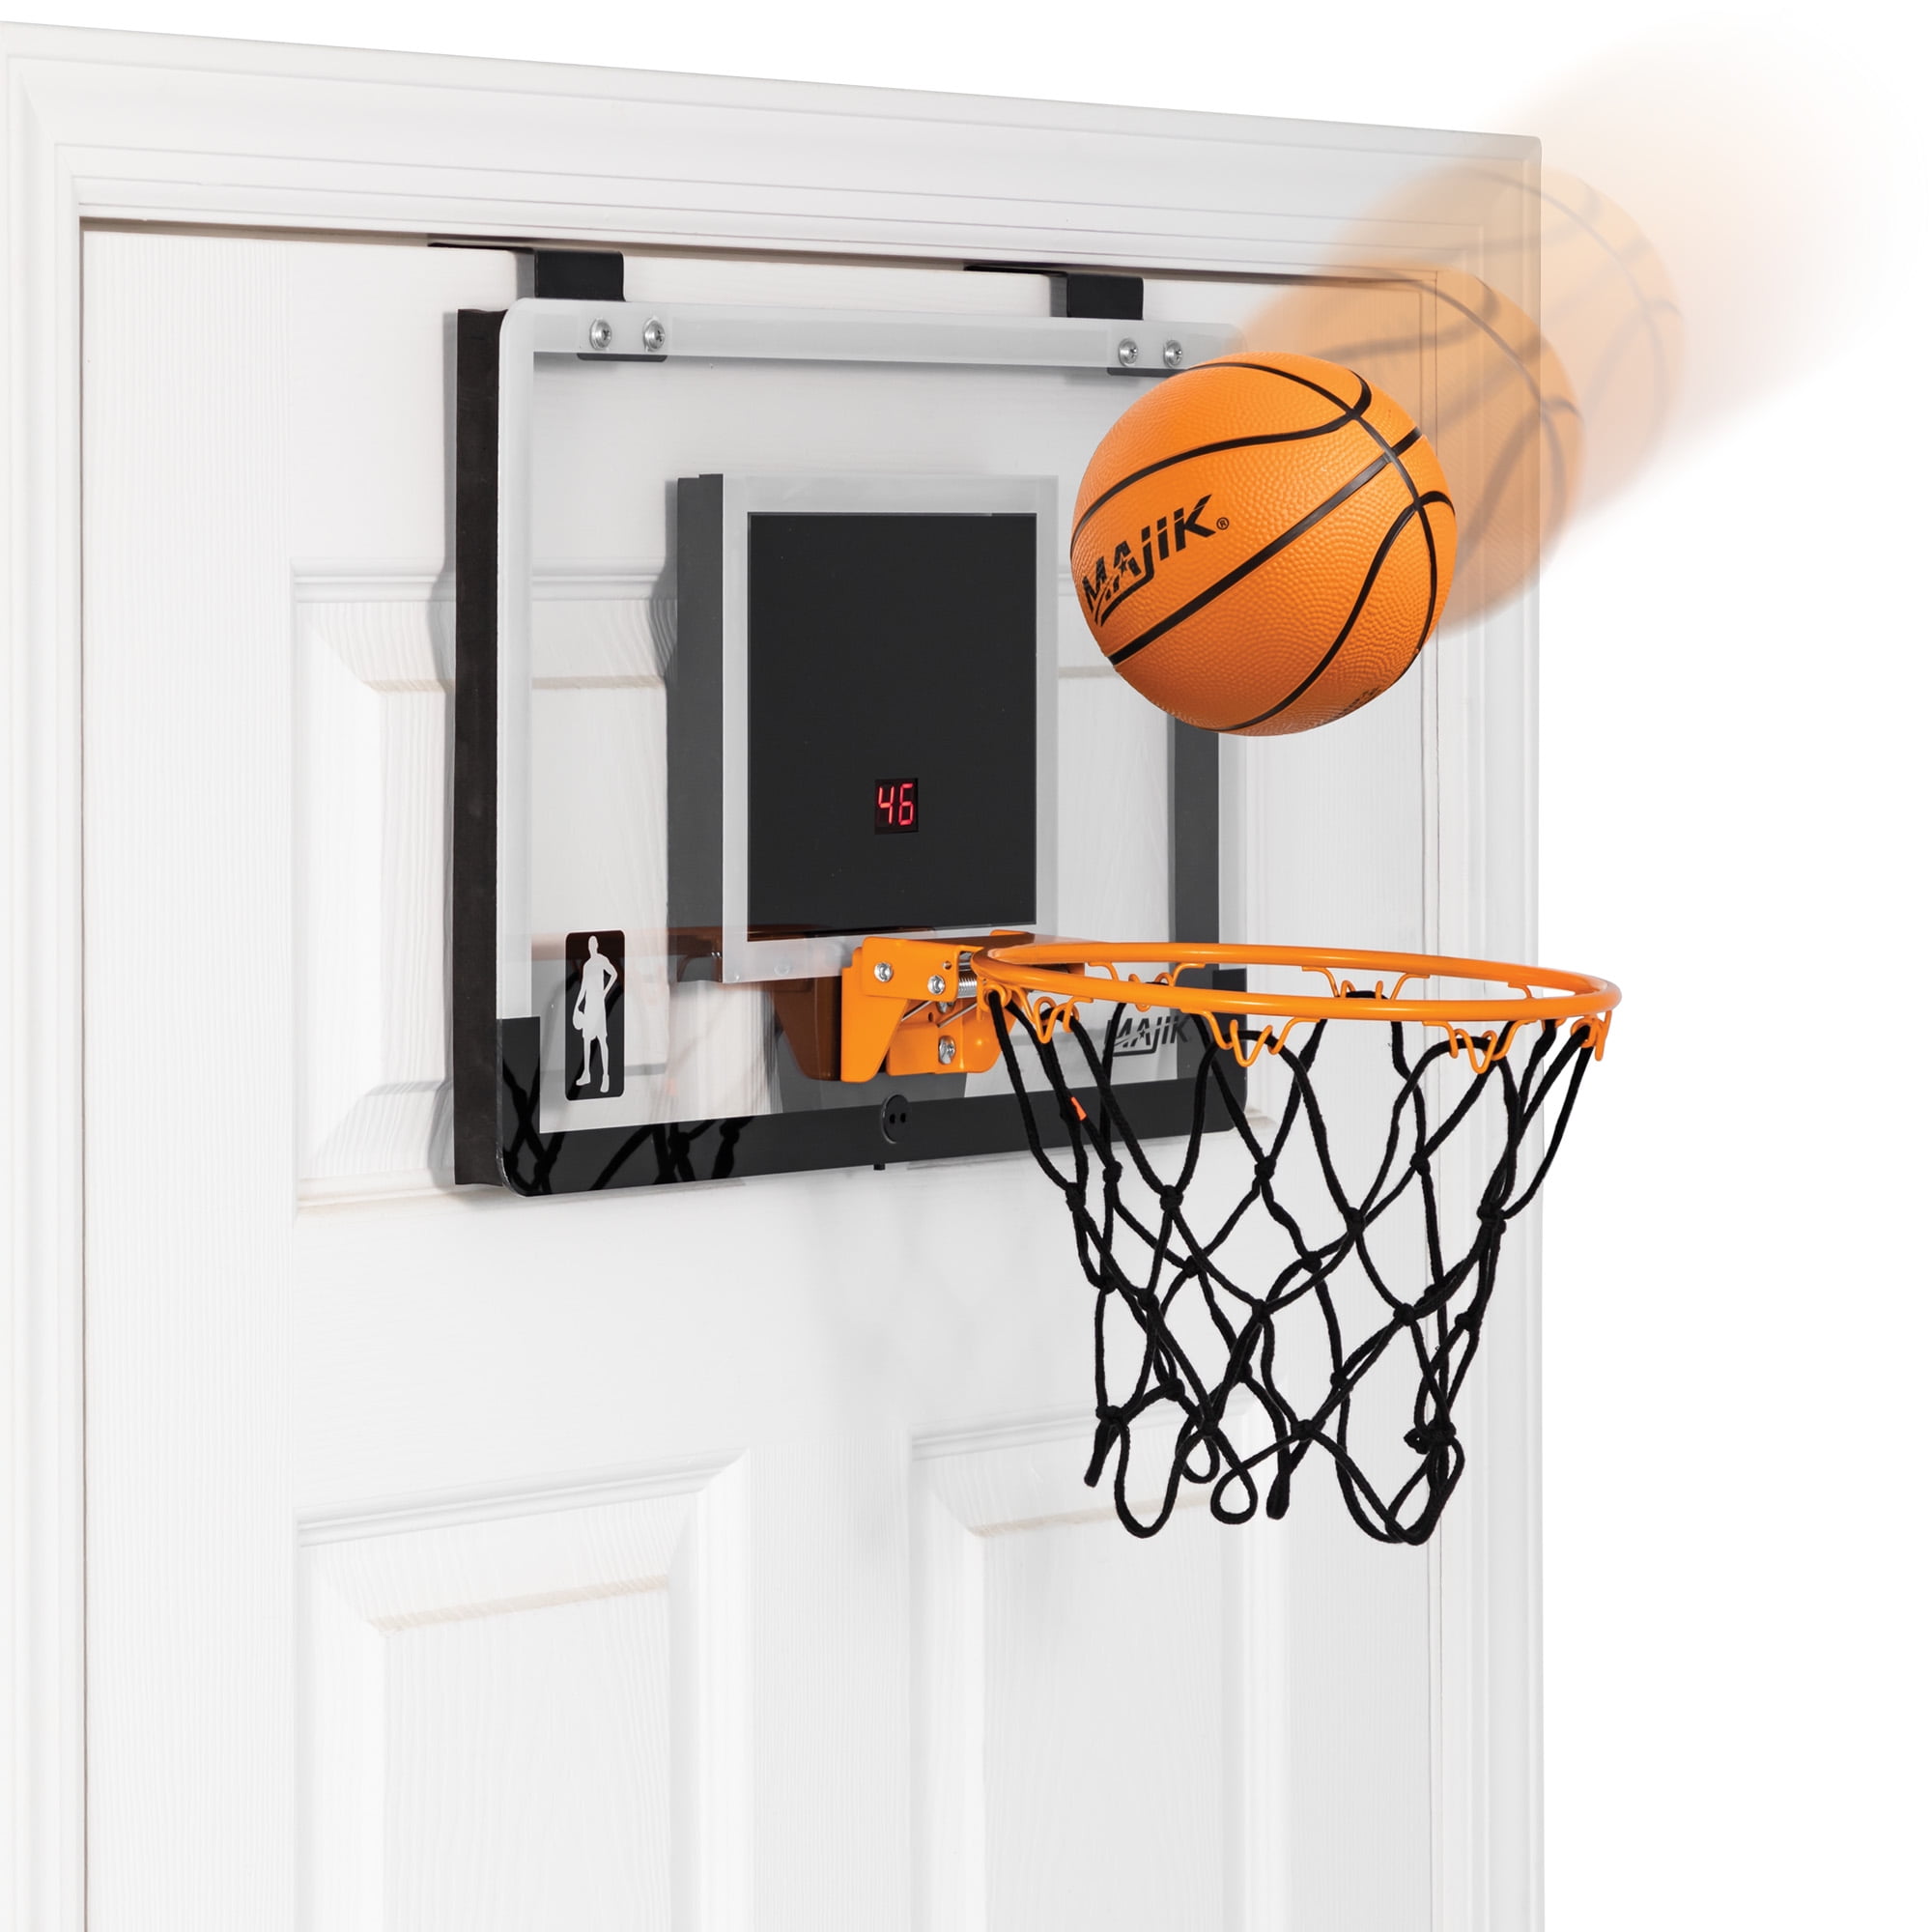 Majik Over the Door Basketball With Led Scoring, 12” (H) x 18” (W). -  Walmart.com